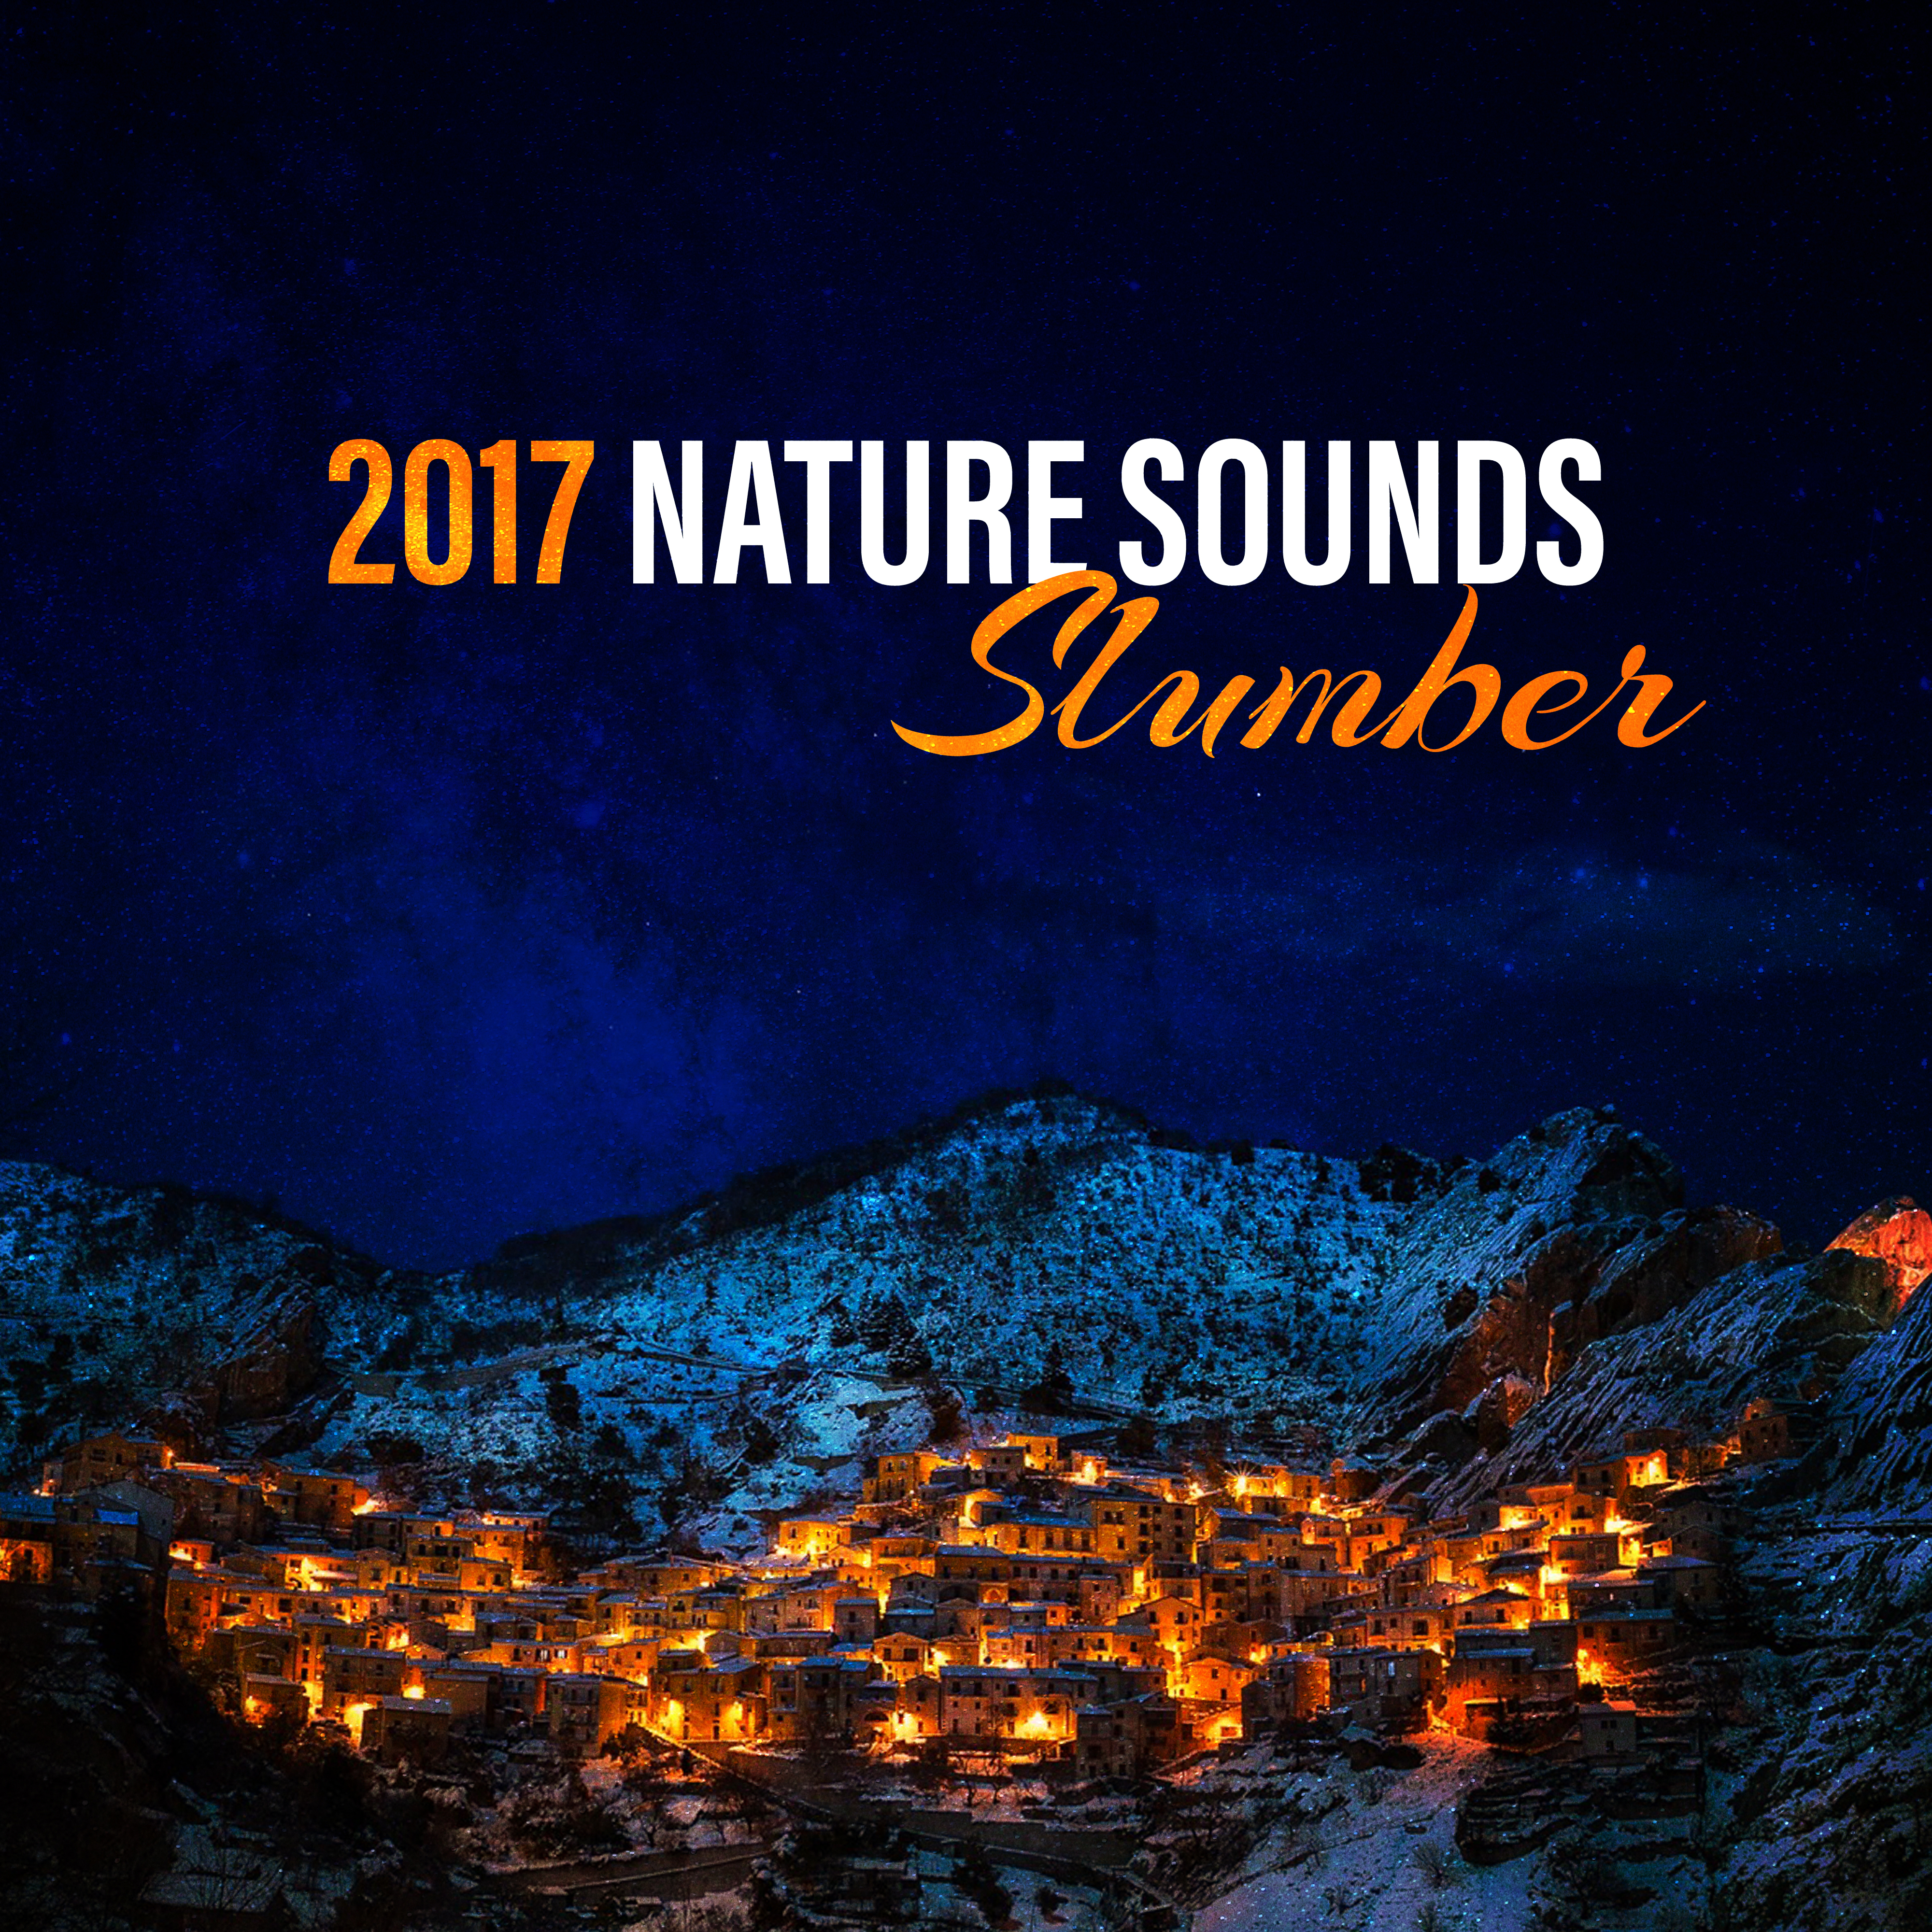 2017 Nature Sounds Slumber